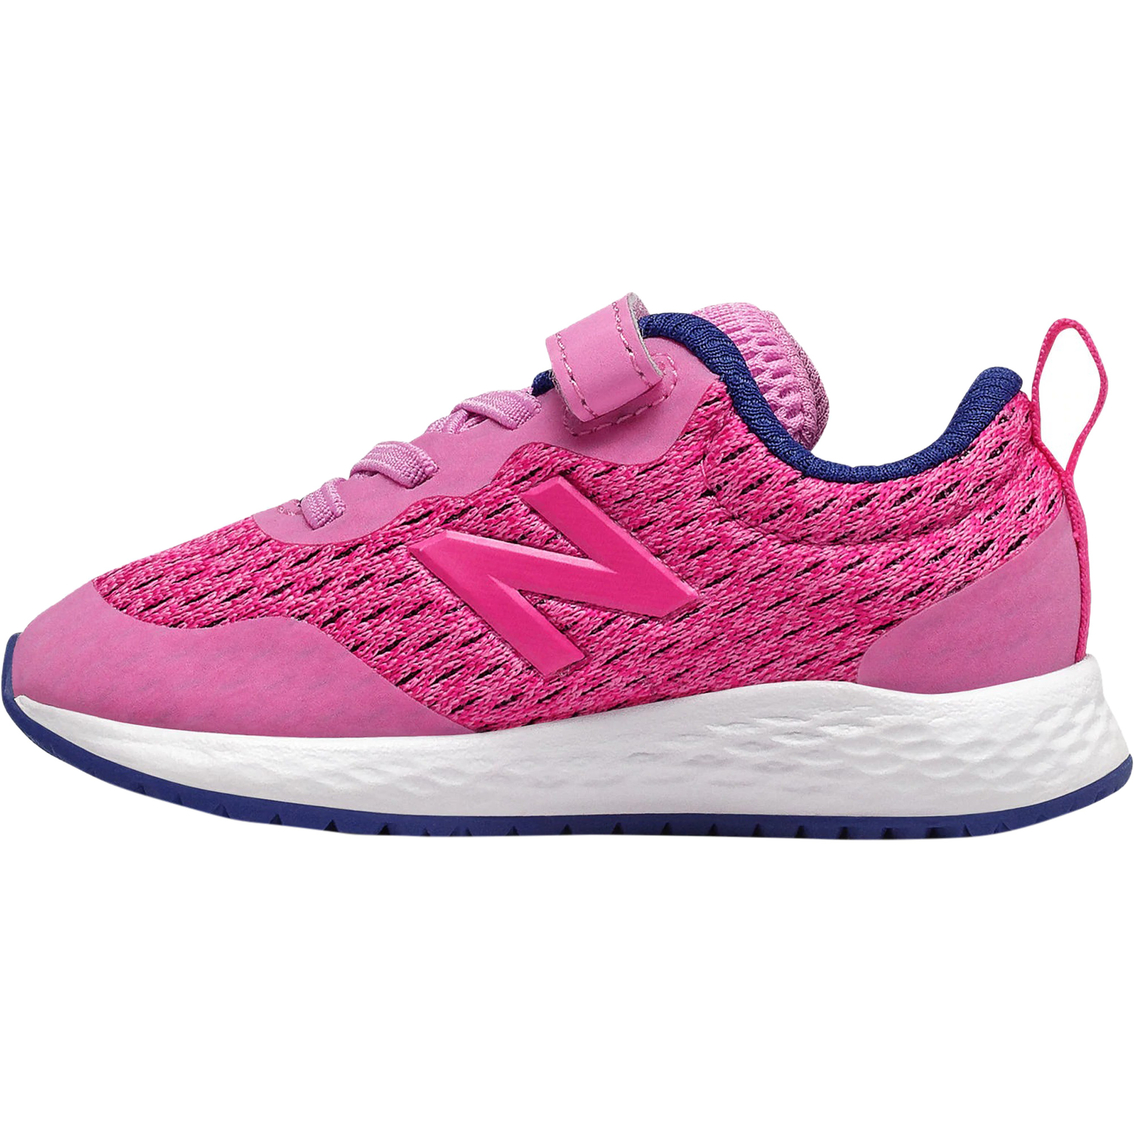 New Balance Toddler Girls Iaaricp3 Running Shoes | Children's Athletic ...